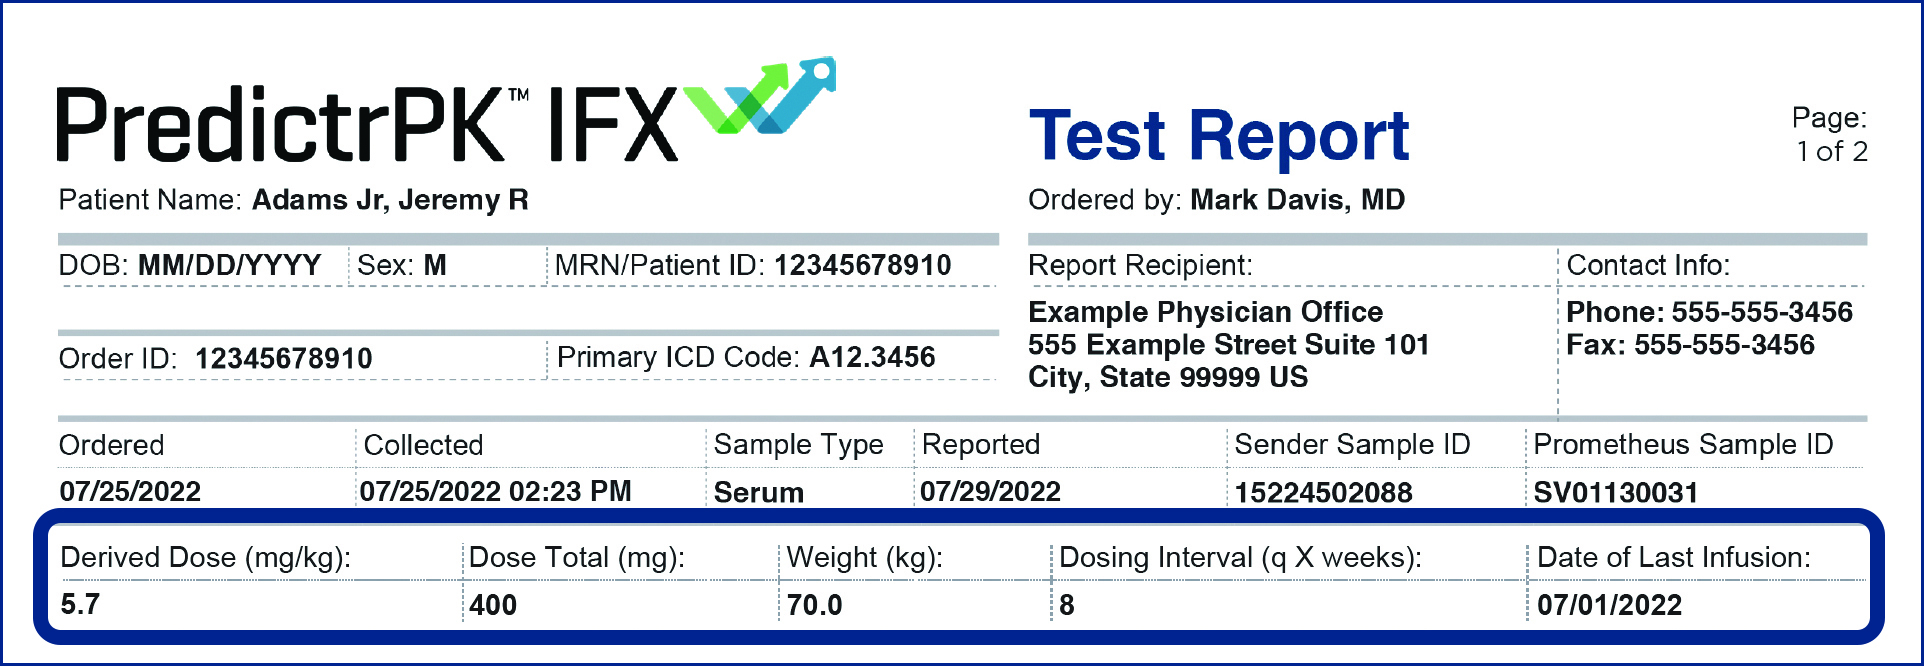 Test Report - Patient Info